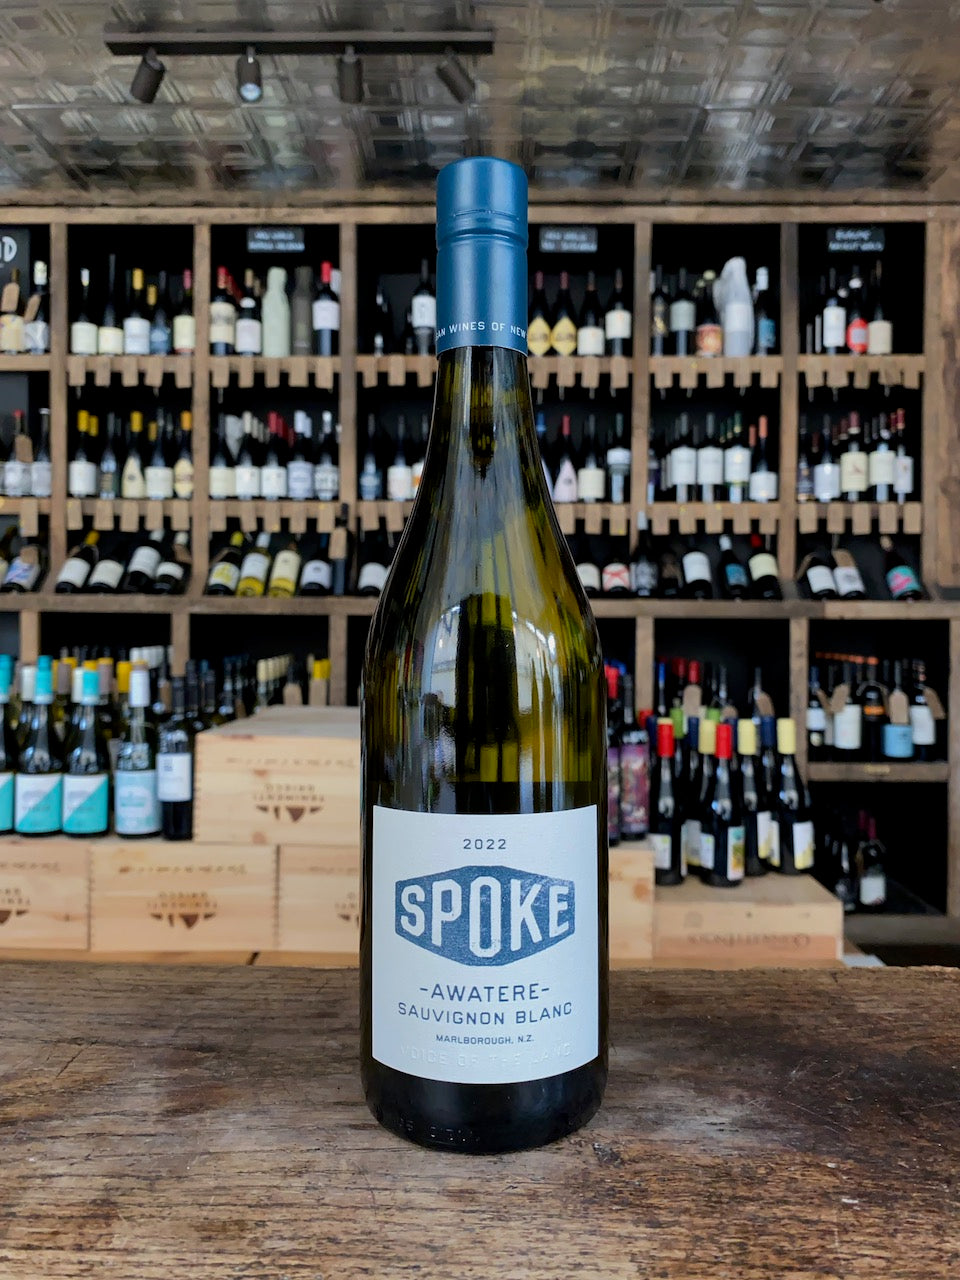 Awatere Sauvignon Blanc, Spoke Wines, Marlborough